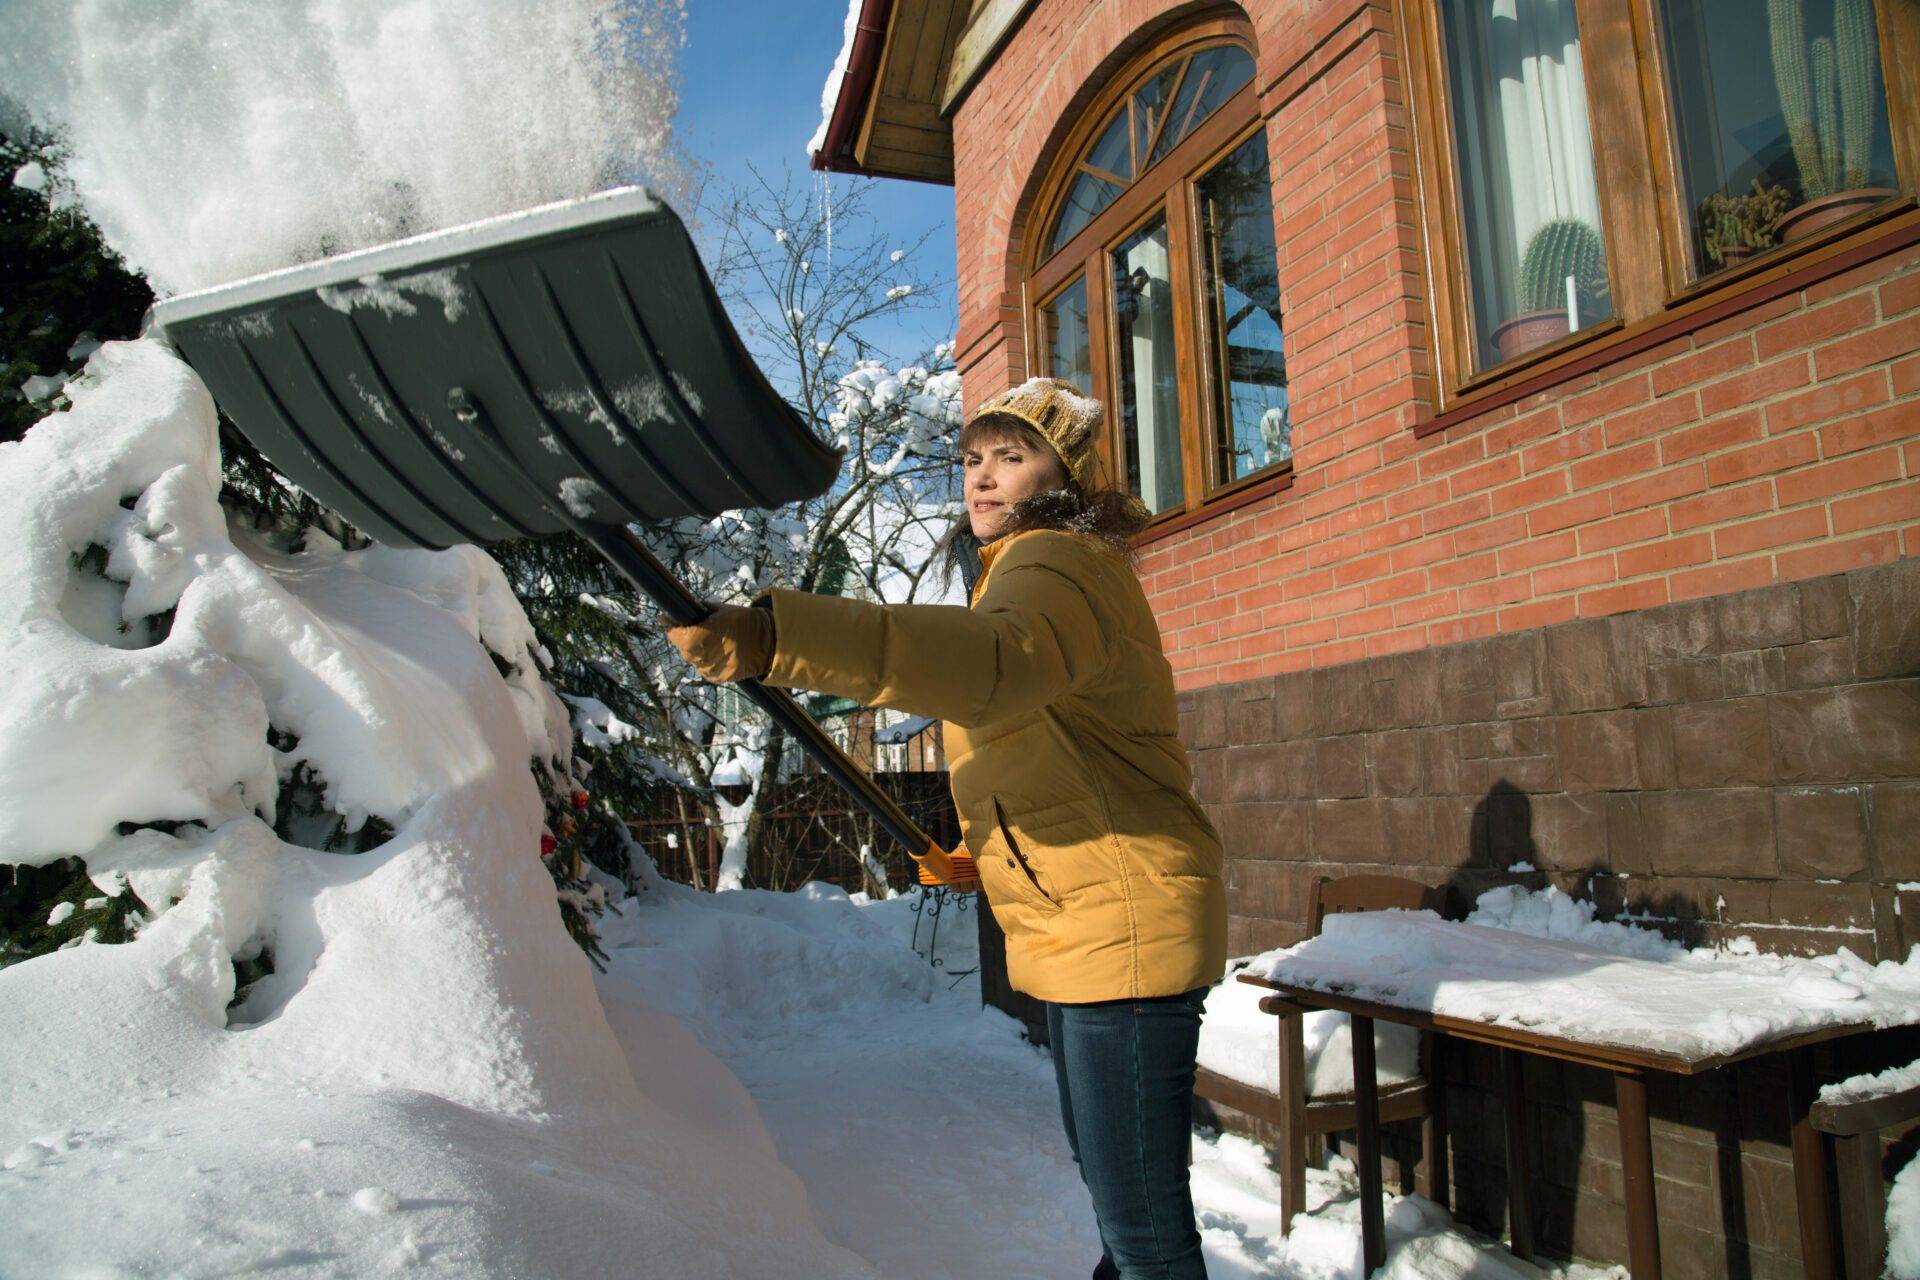 A woman throws snow with a shovel near the house